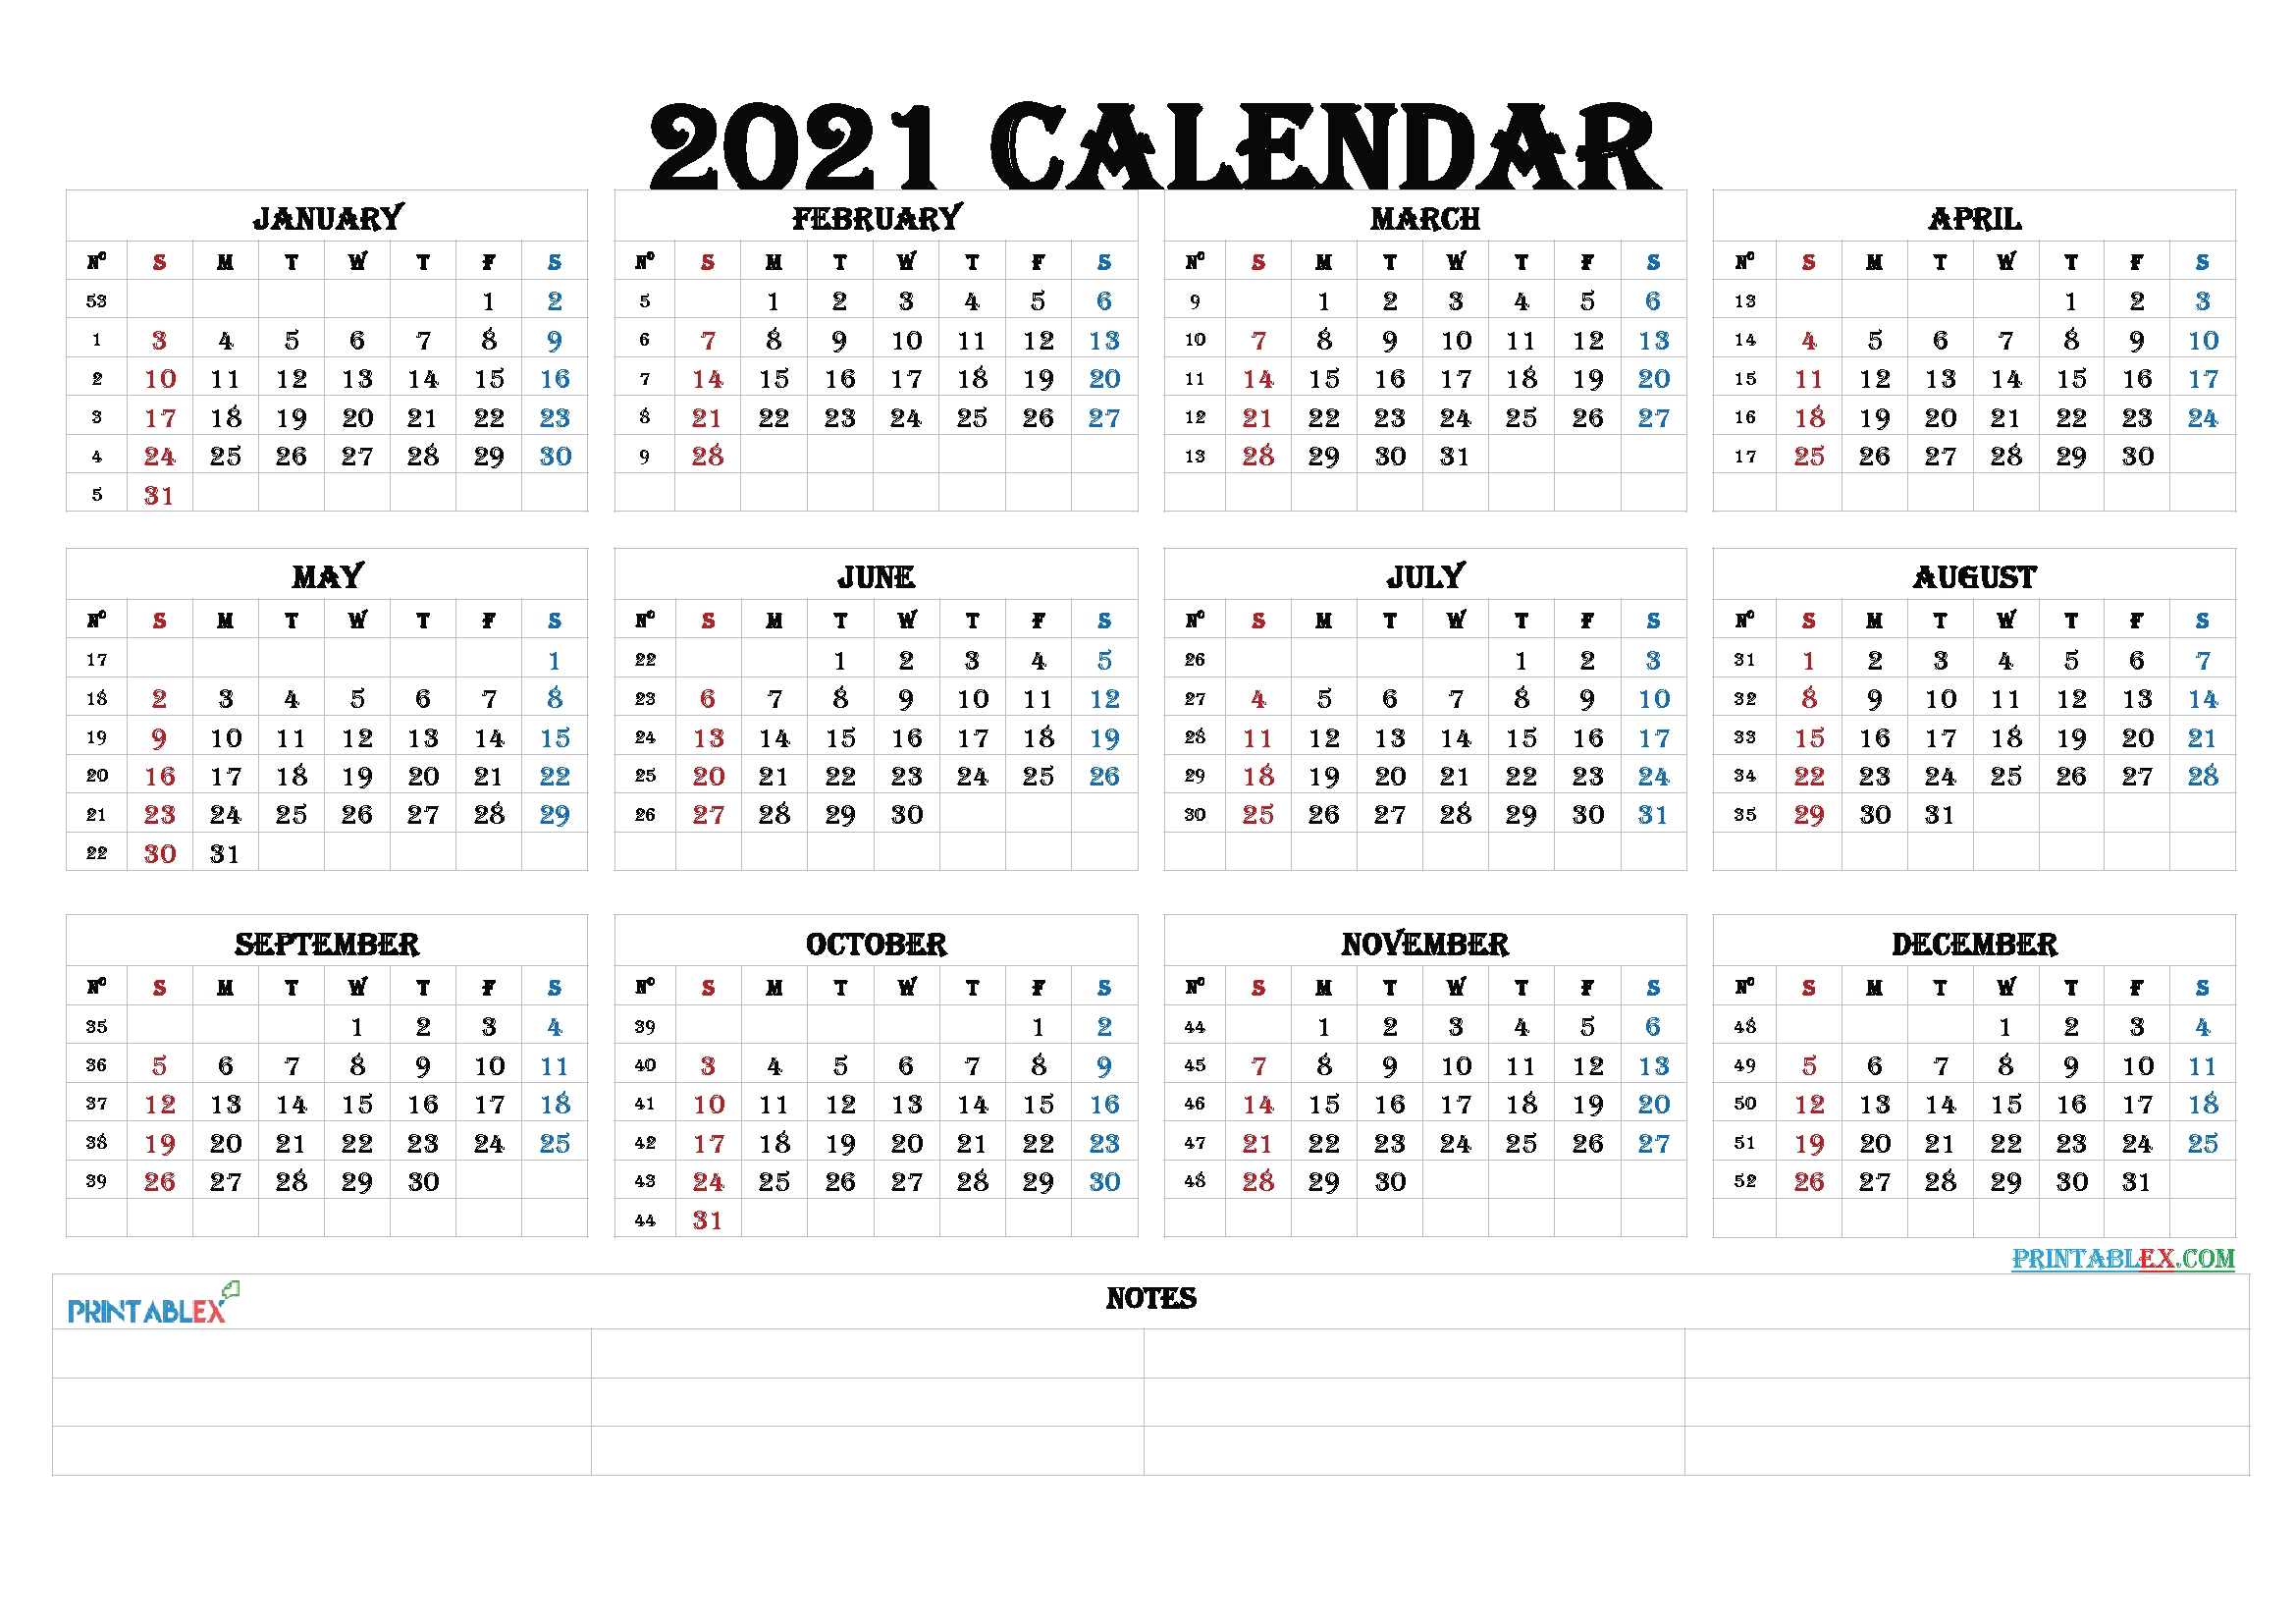 Calendar 2021 With Weeks Number Template | Calendar ...